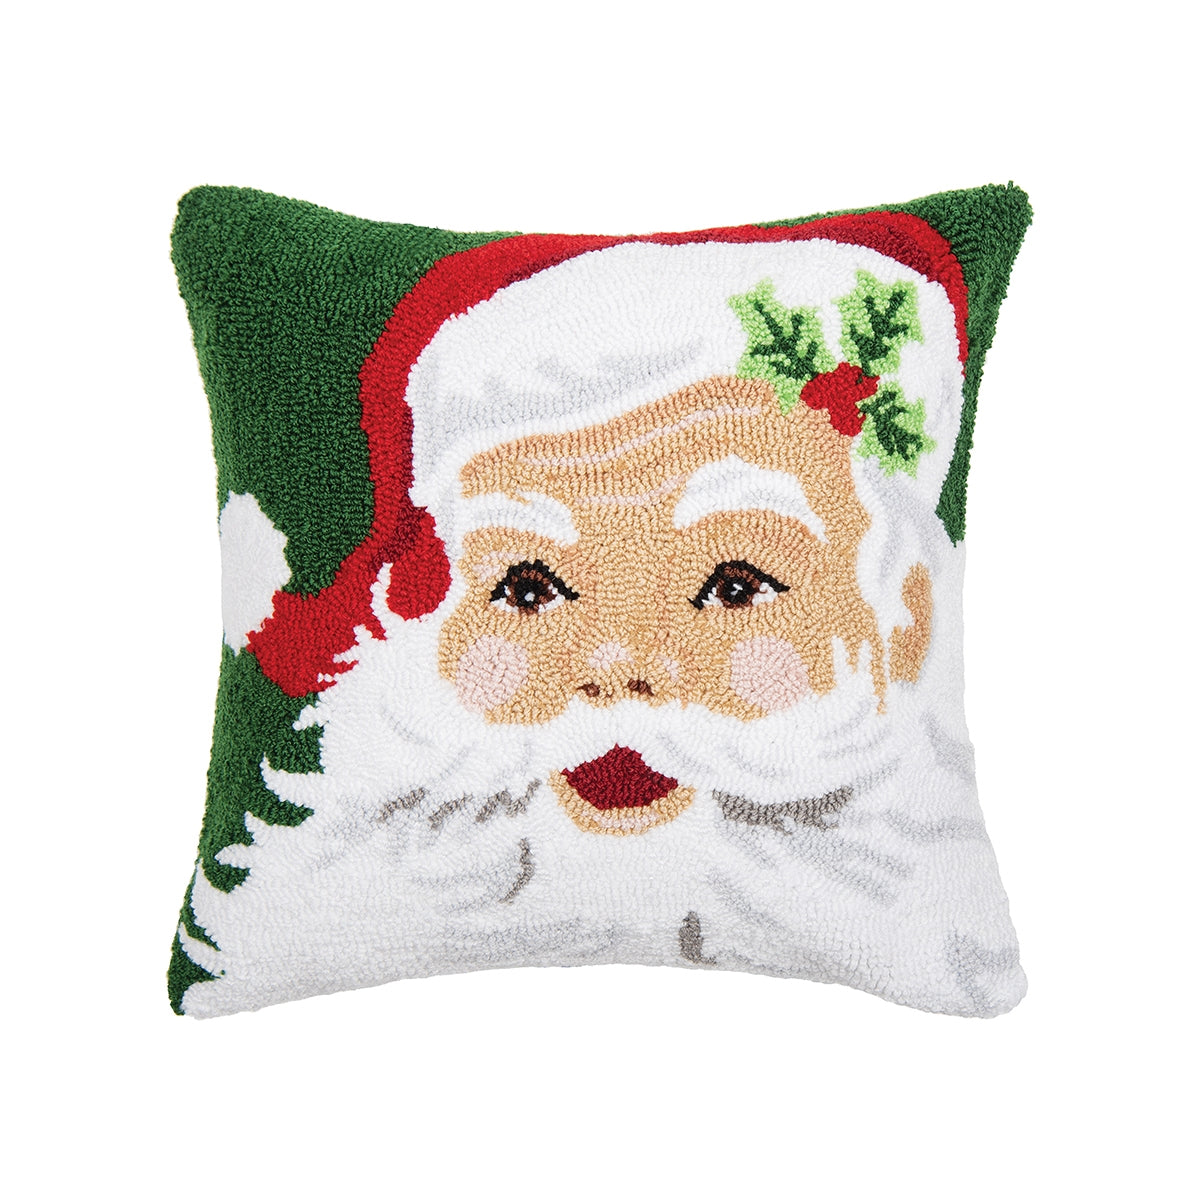 Santa Claus Pillow